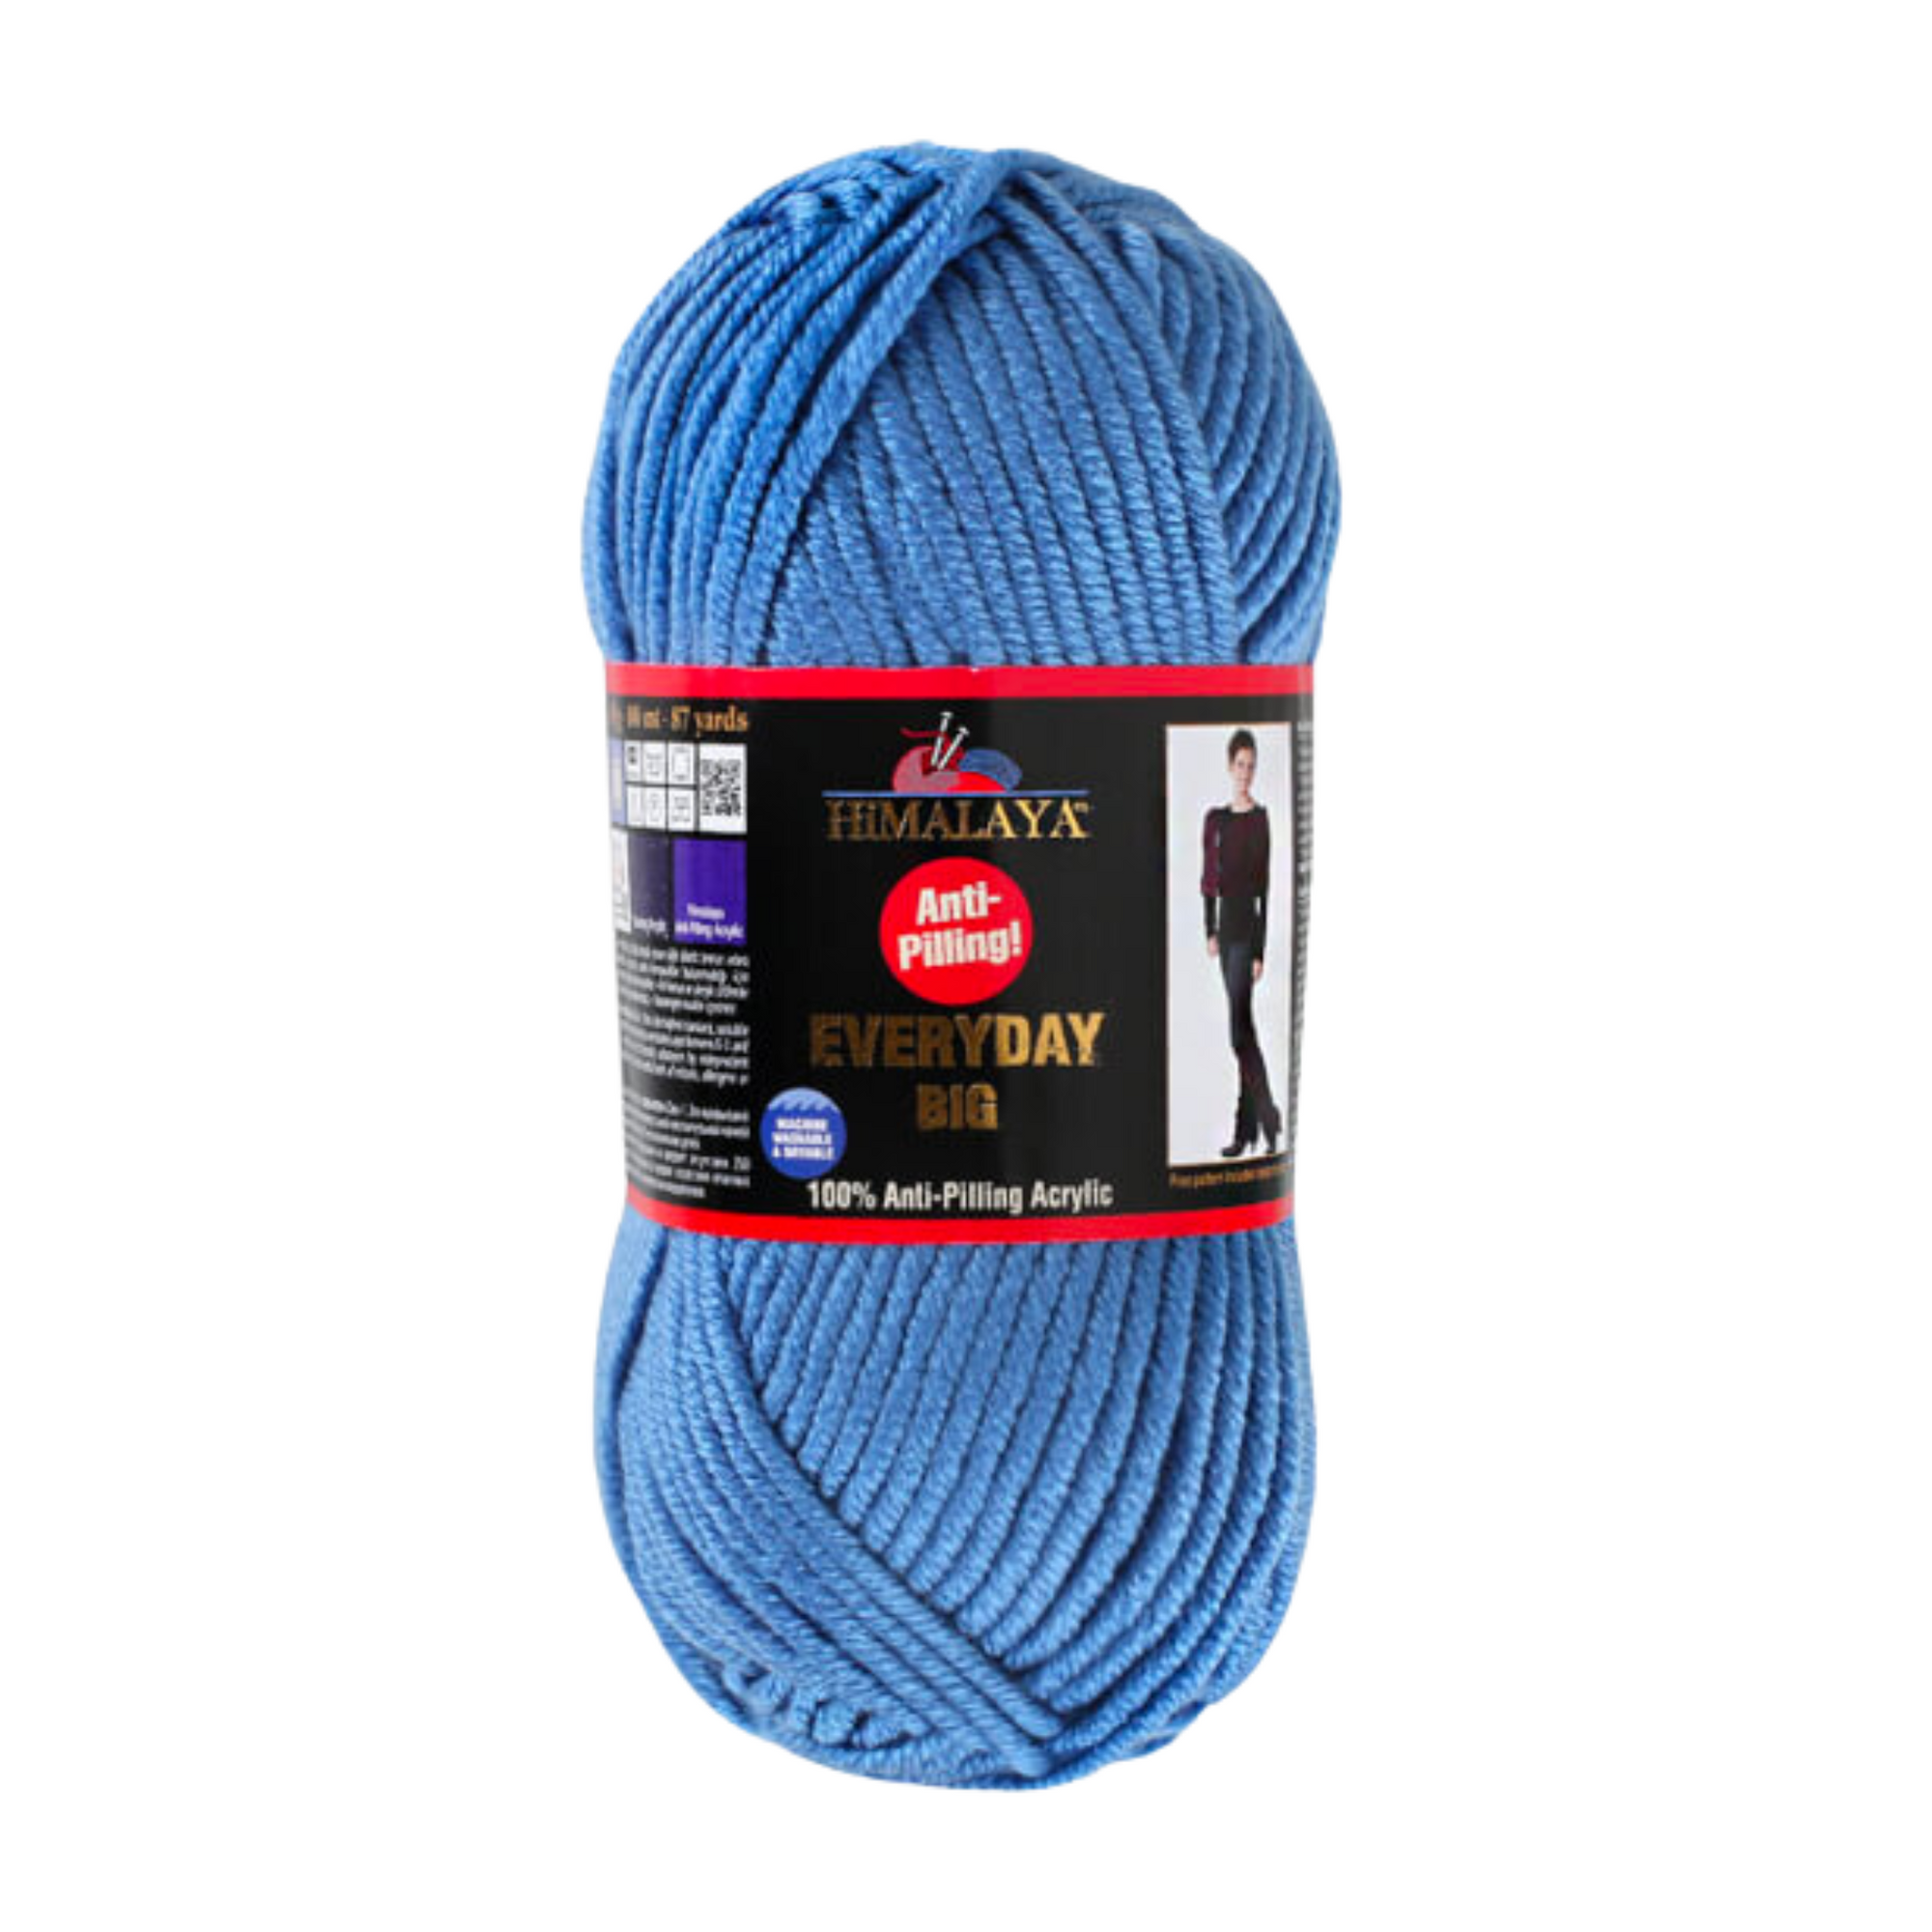 Himalaya Everyday 100% Anti-Pilling Acrylic Yarn, Brick Yellow - 70806